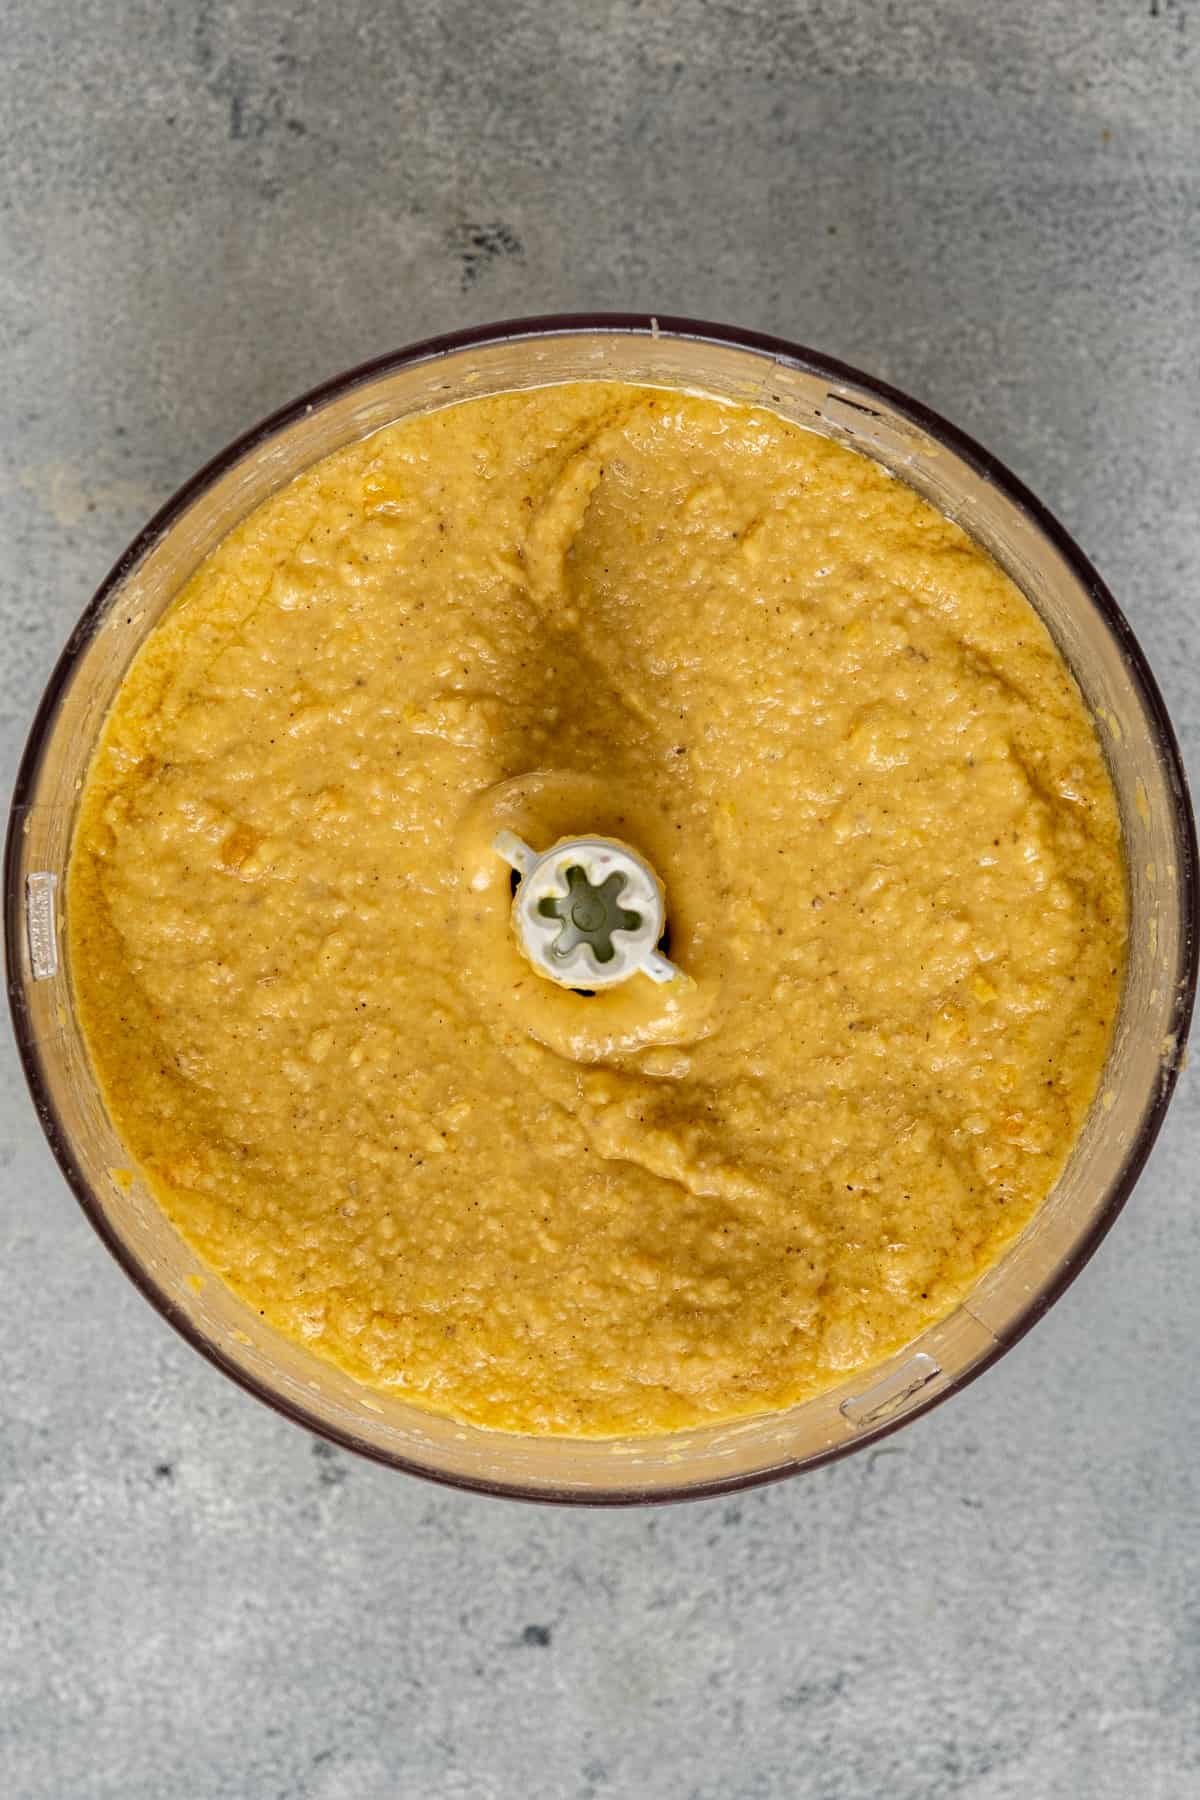 Creamy red lentil hummus in a blender.